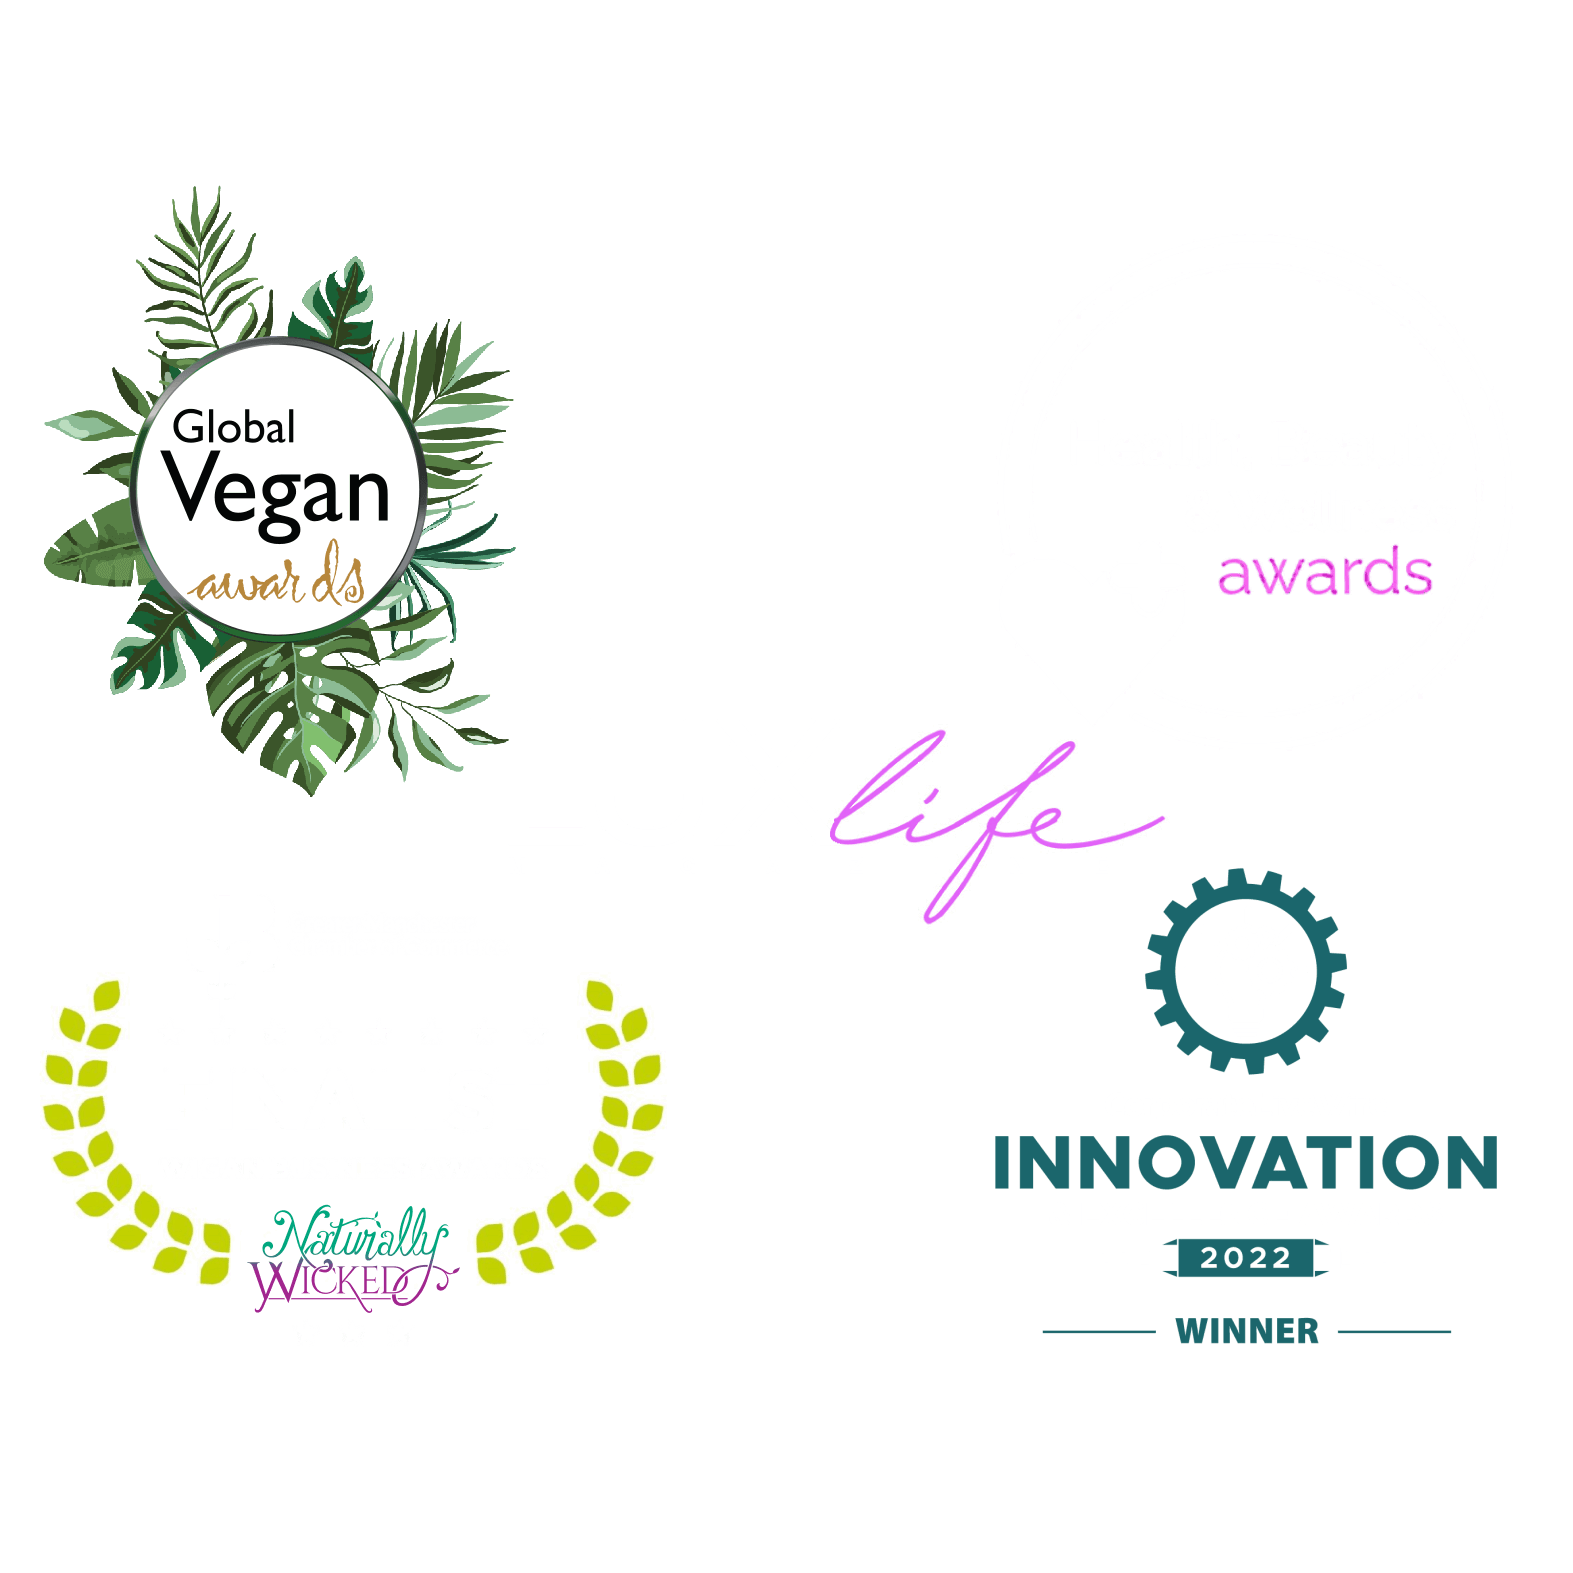 Award Winning Company Naturally Wicked Displays Vegan Beauty, Wellness, Candle & Innovation Awards